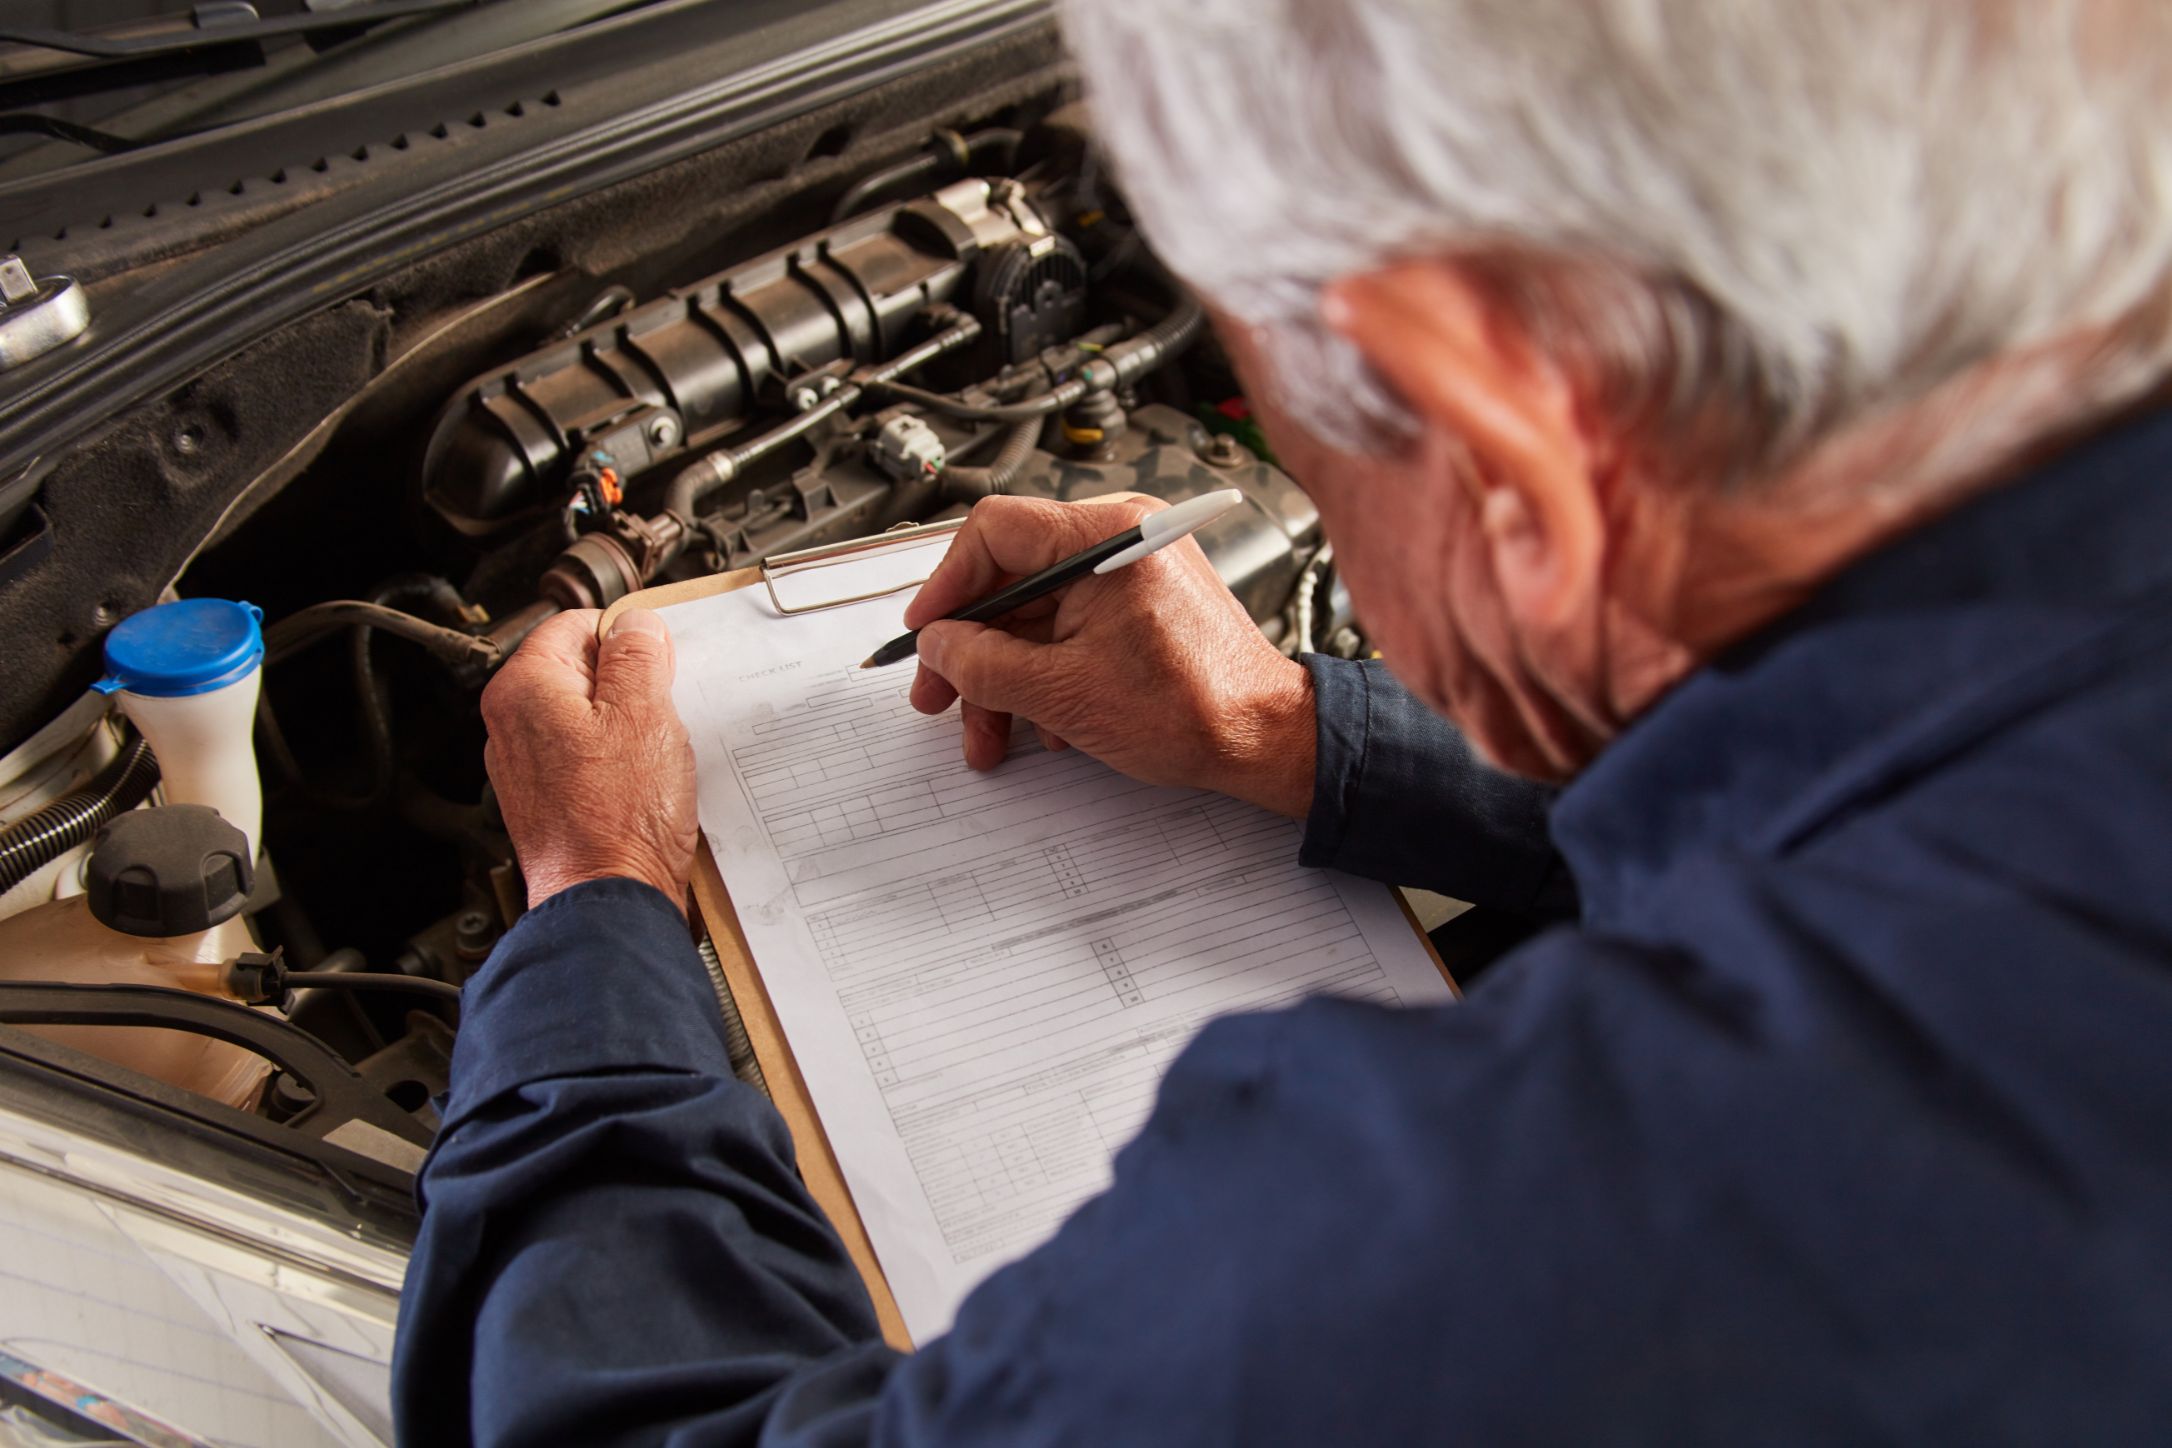 Car mechanic conducting an inspection